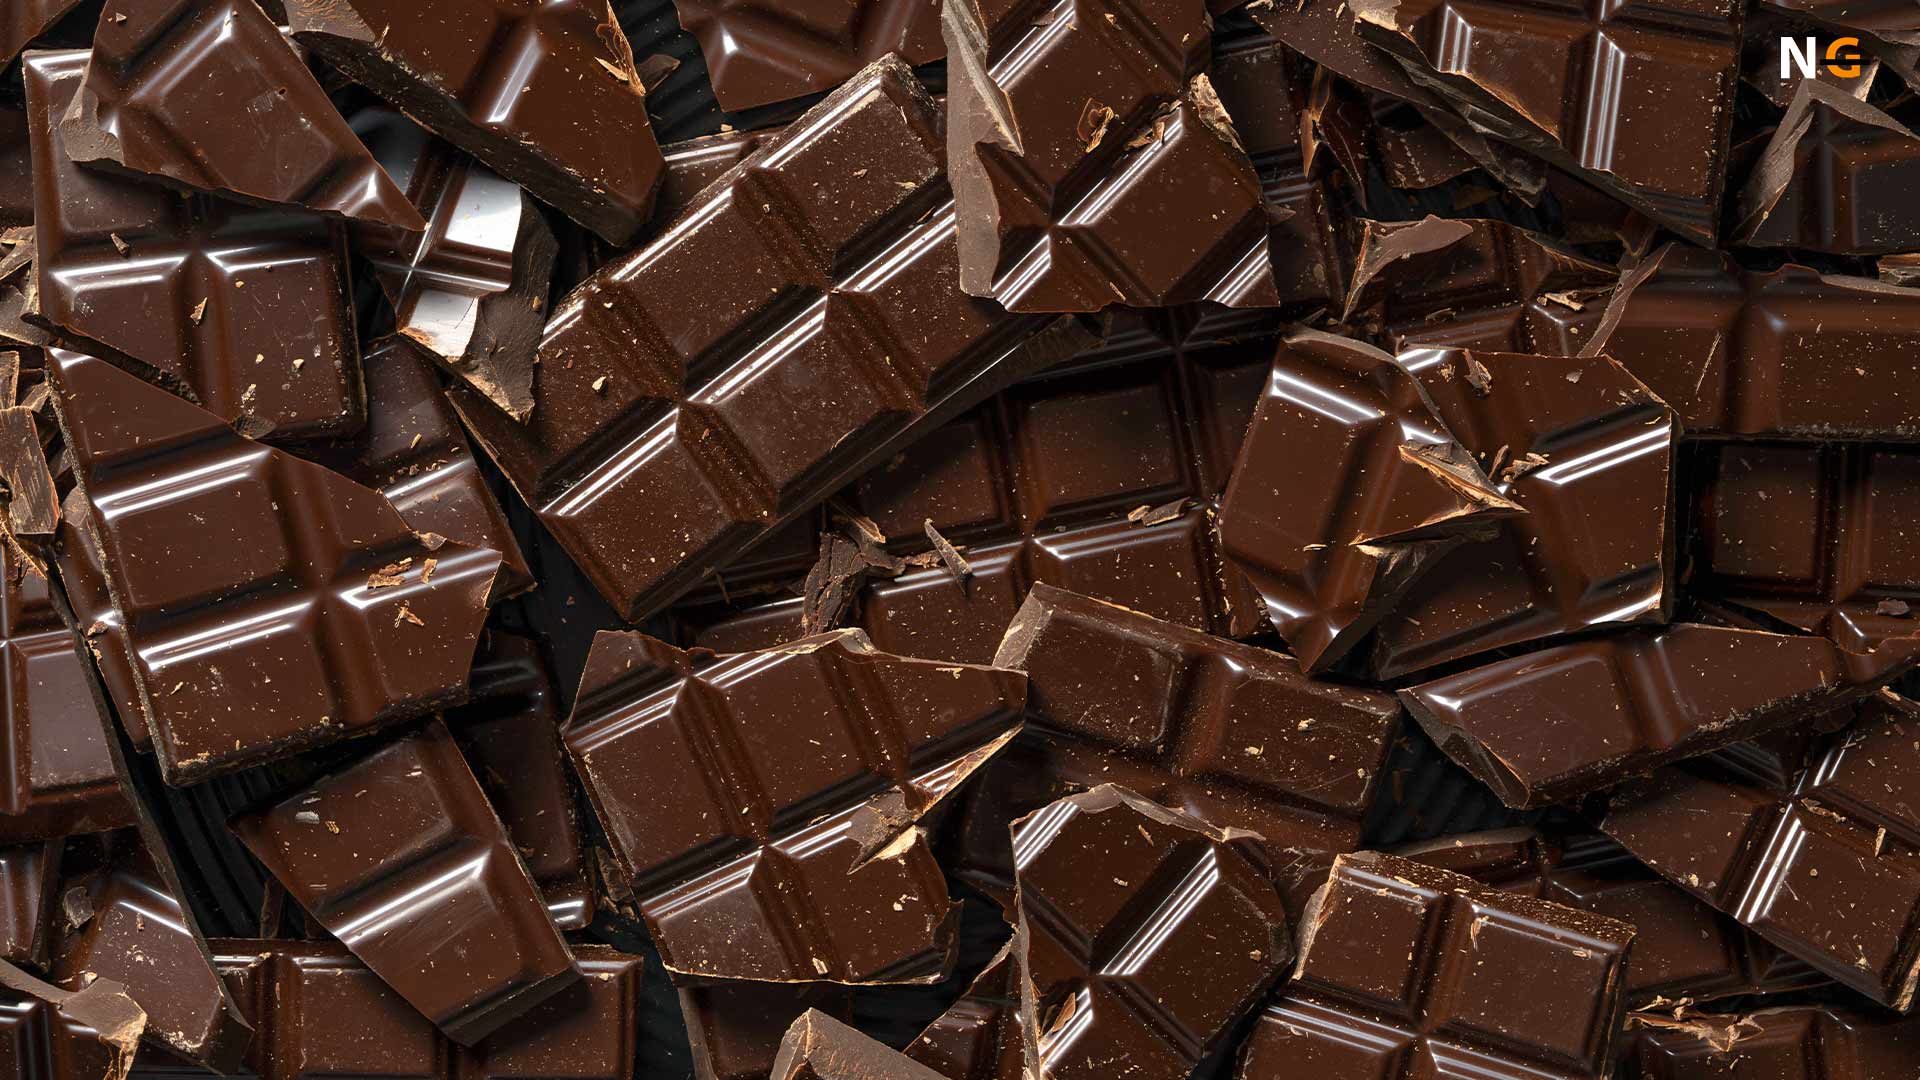 Healthier Substitutes To Ghirardelli Chocolates